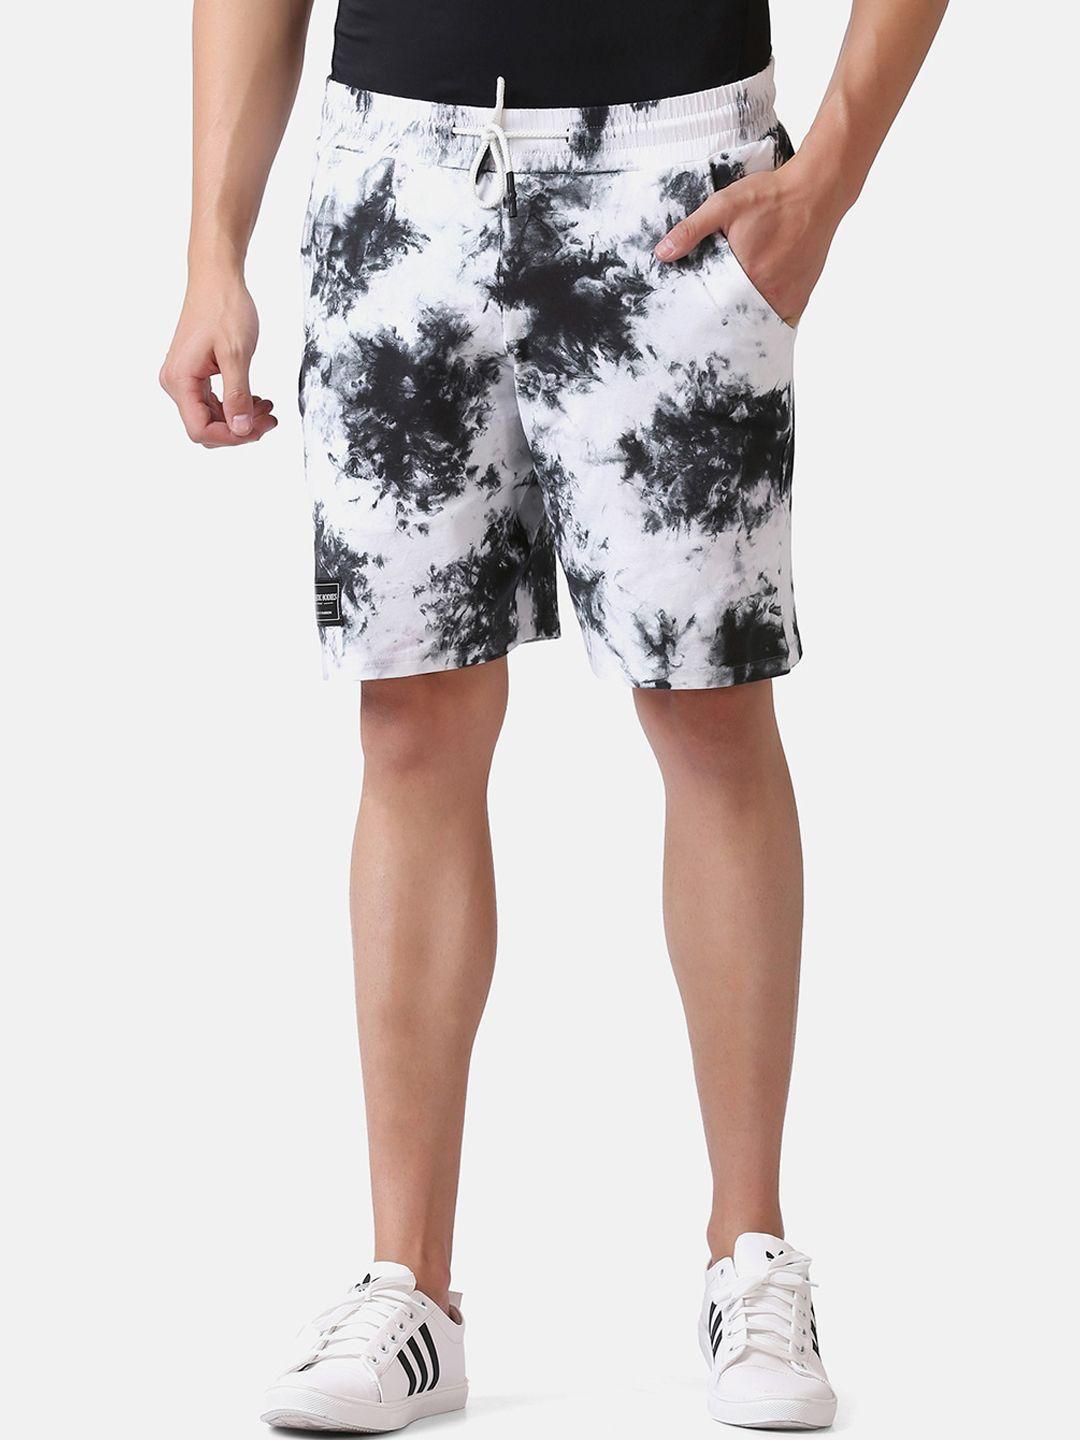 aesthetic-bodies-men-white-printed-training-or-gym-shorts